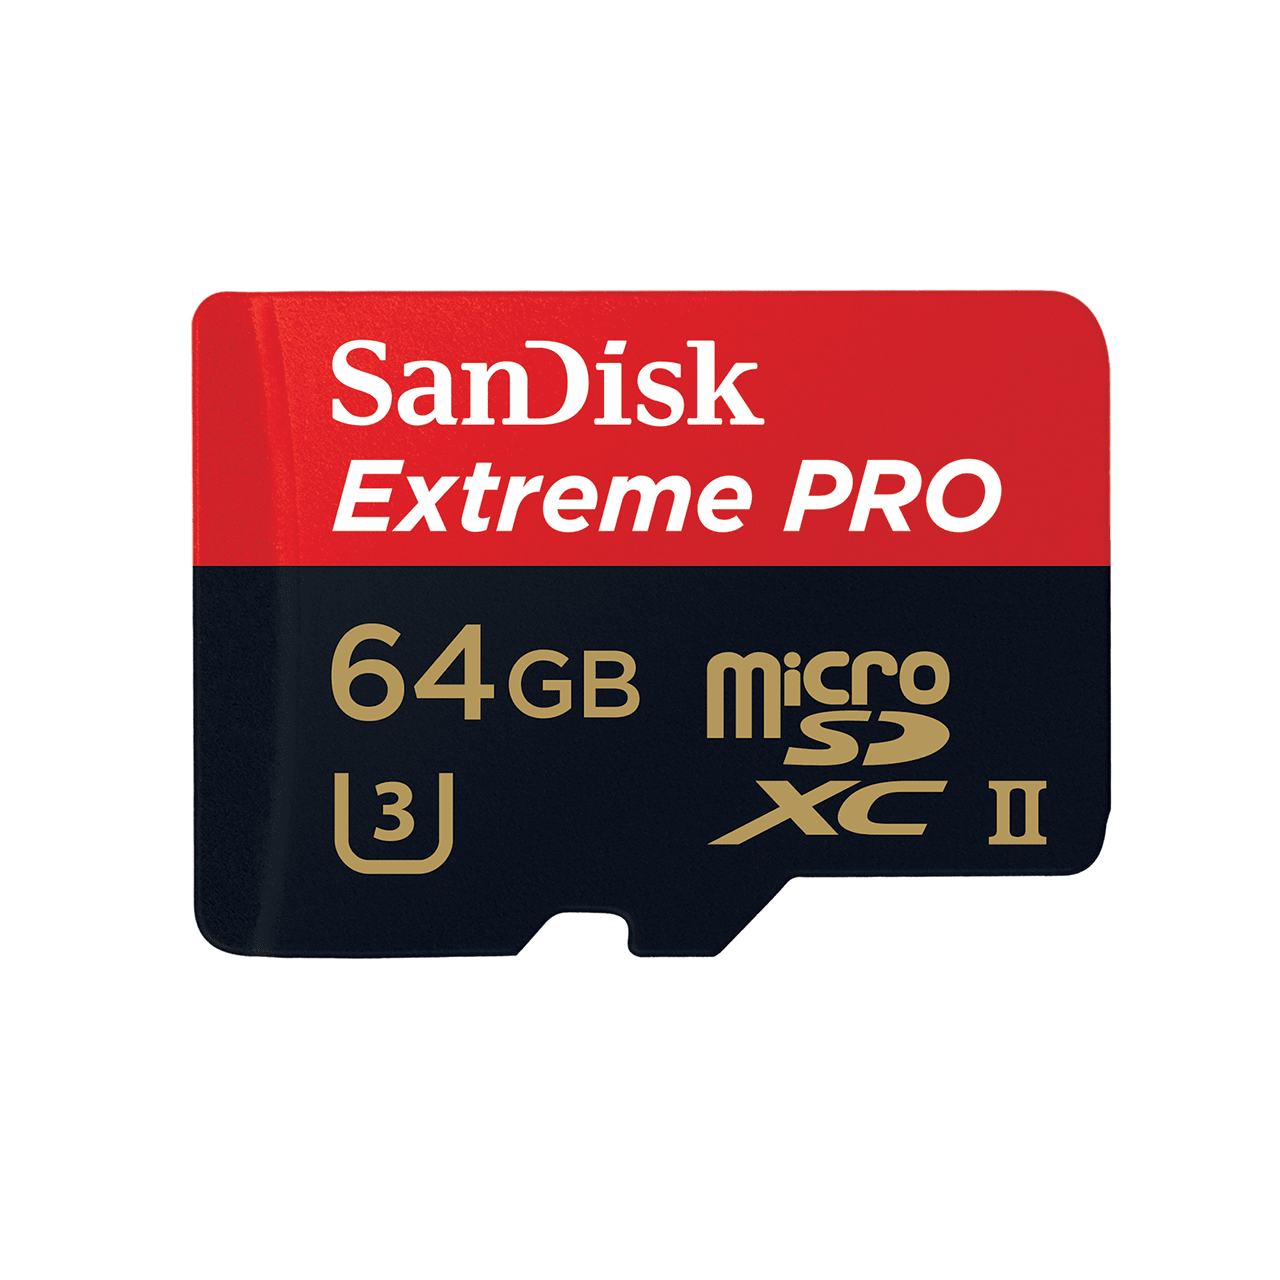 Sandisk Extreme Pro Microsdxc Uhs Ii Card Western Digital Store